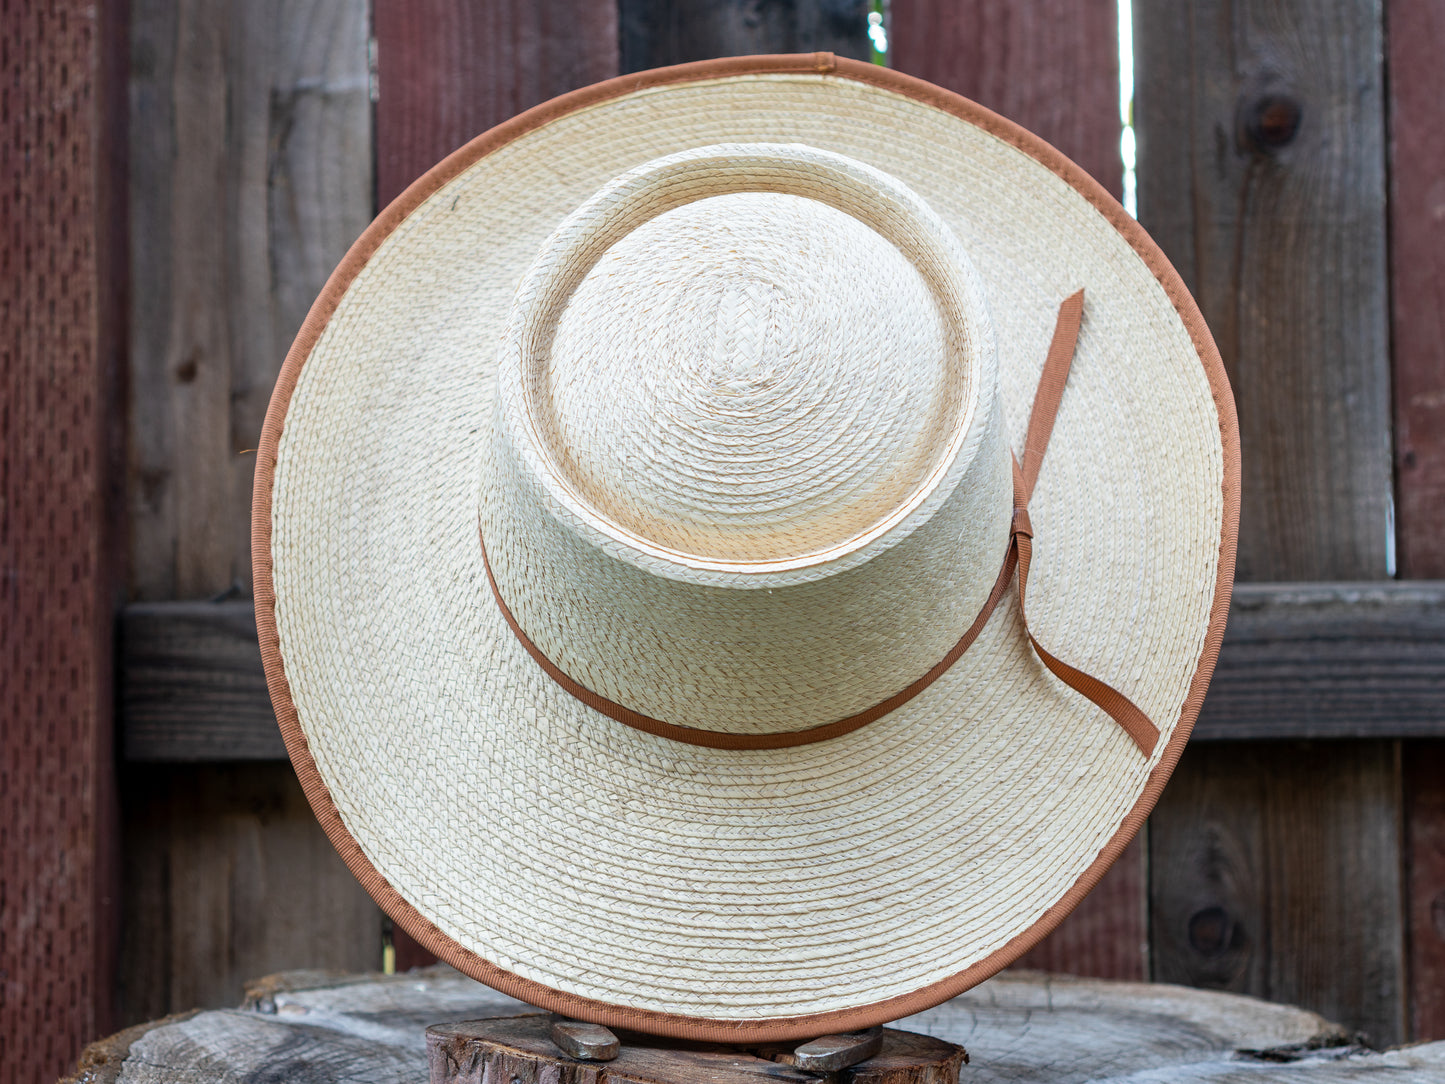 SunBody Hats Guatemala Reata Crease Bound Edge Brown Palm Leaf Hat Tan